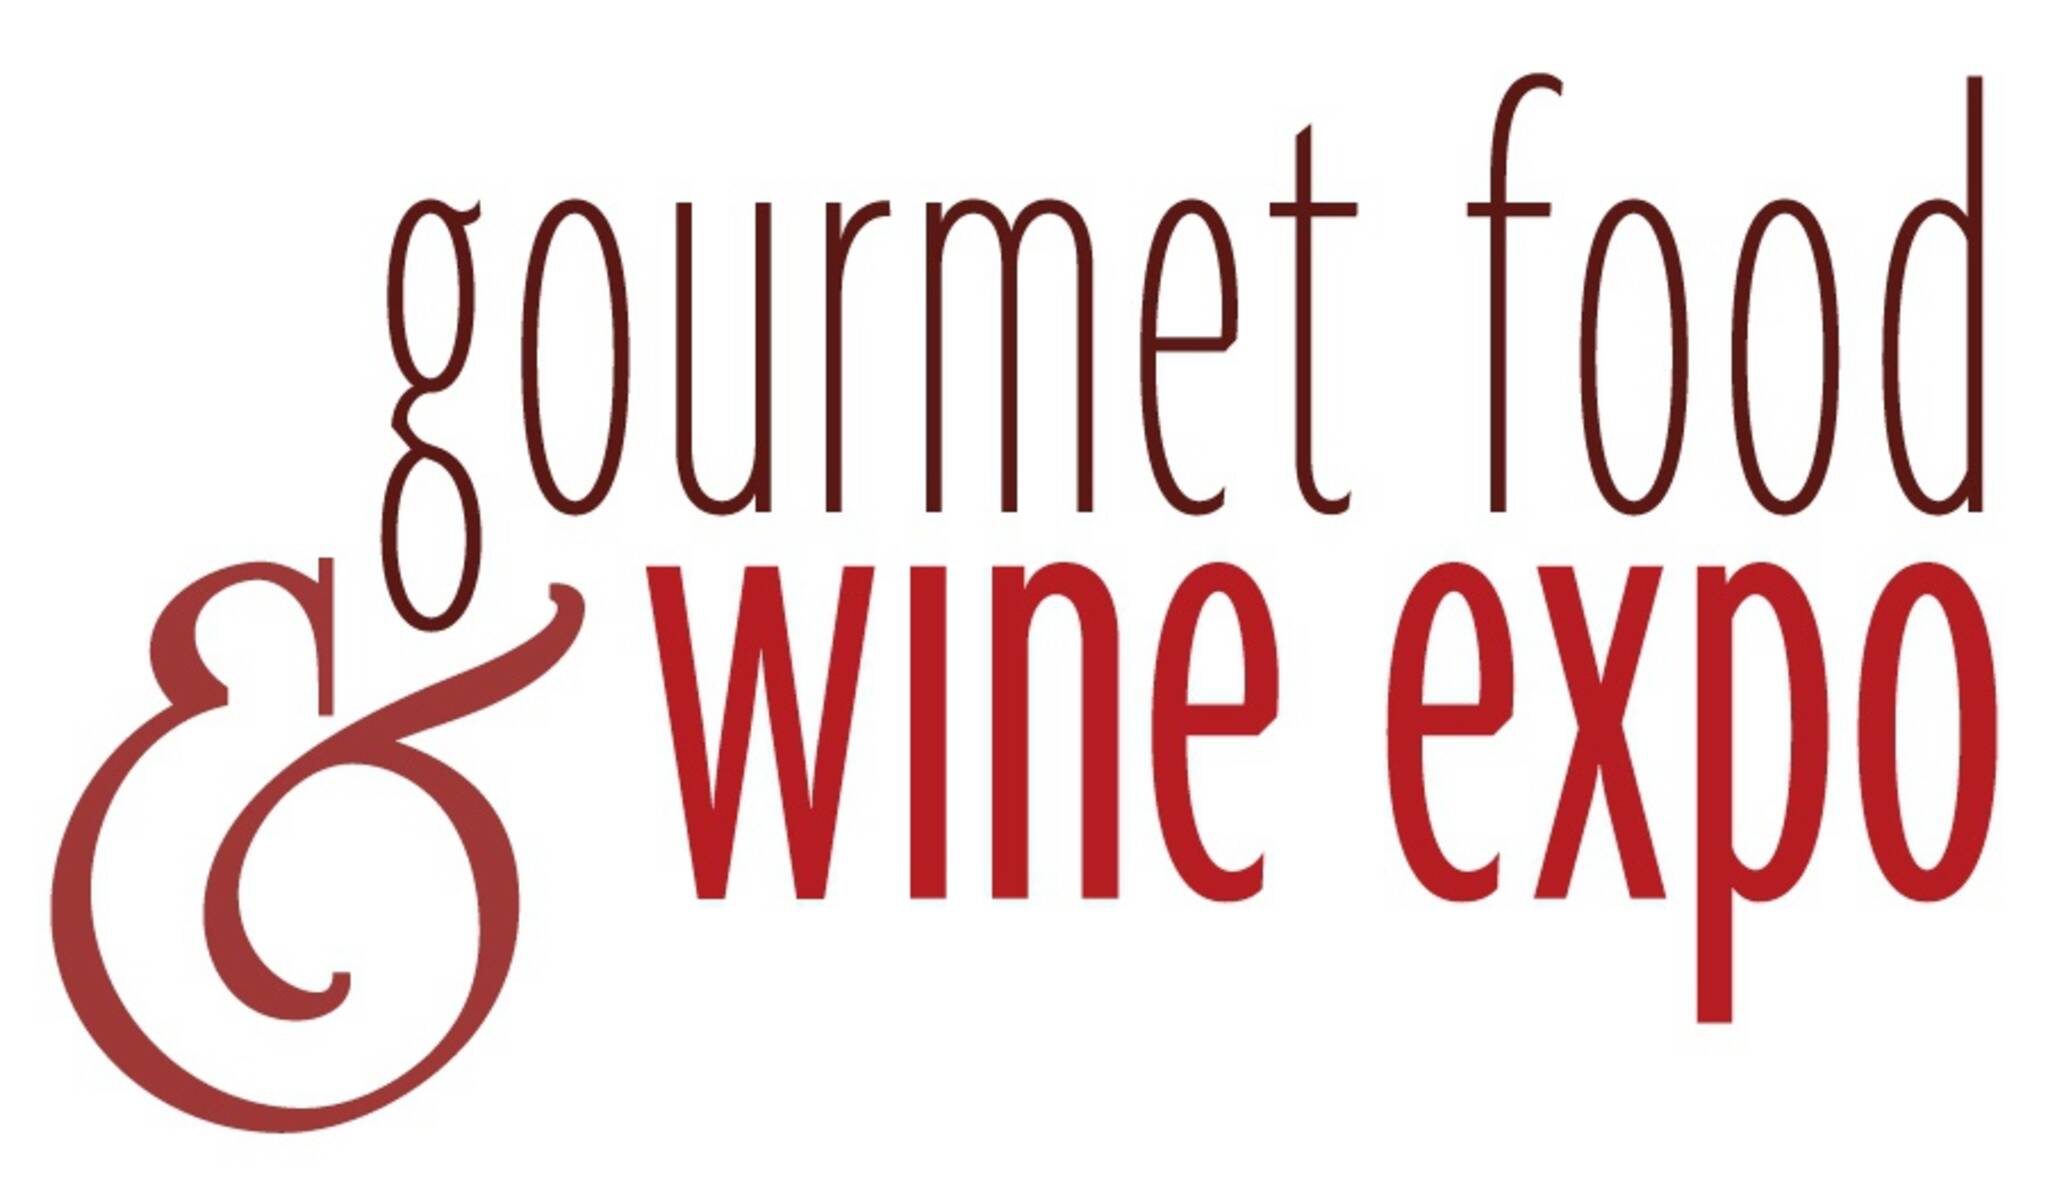 Gourmet Food & Wine Expo